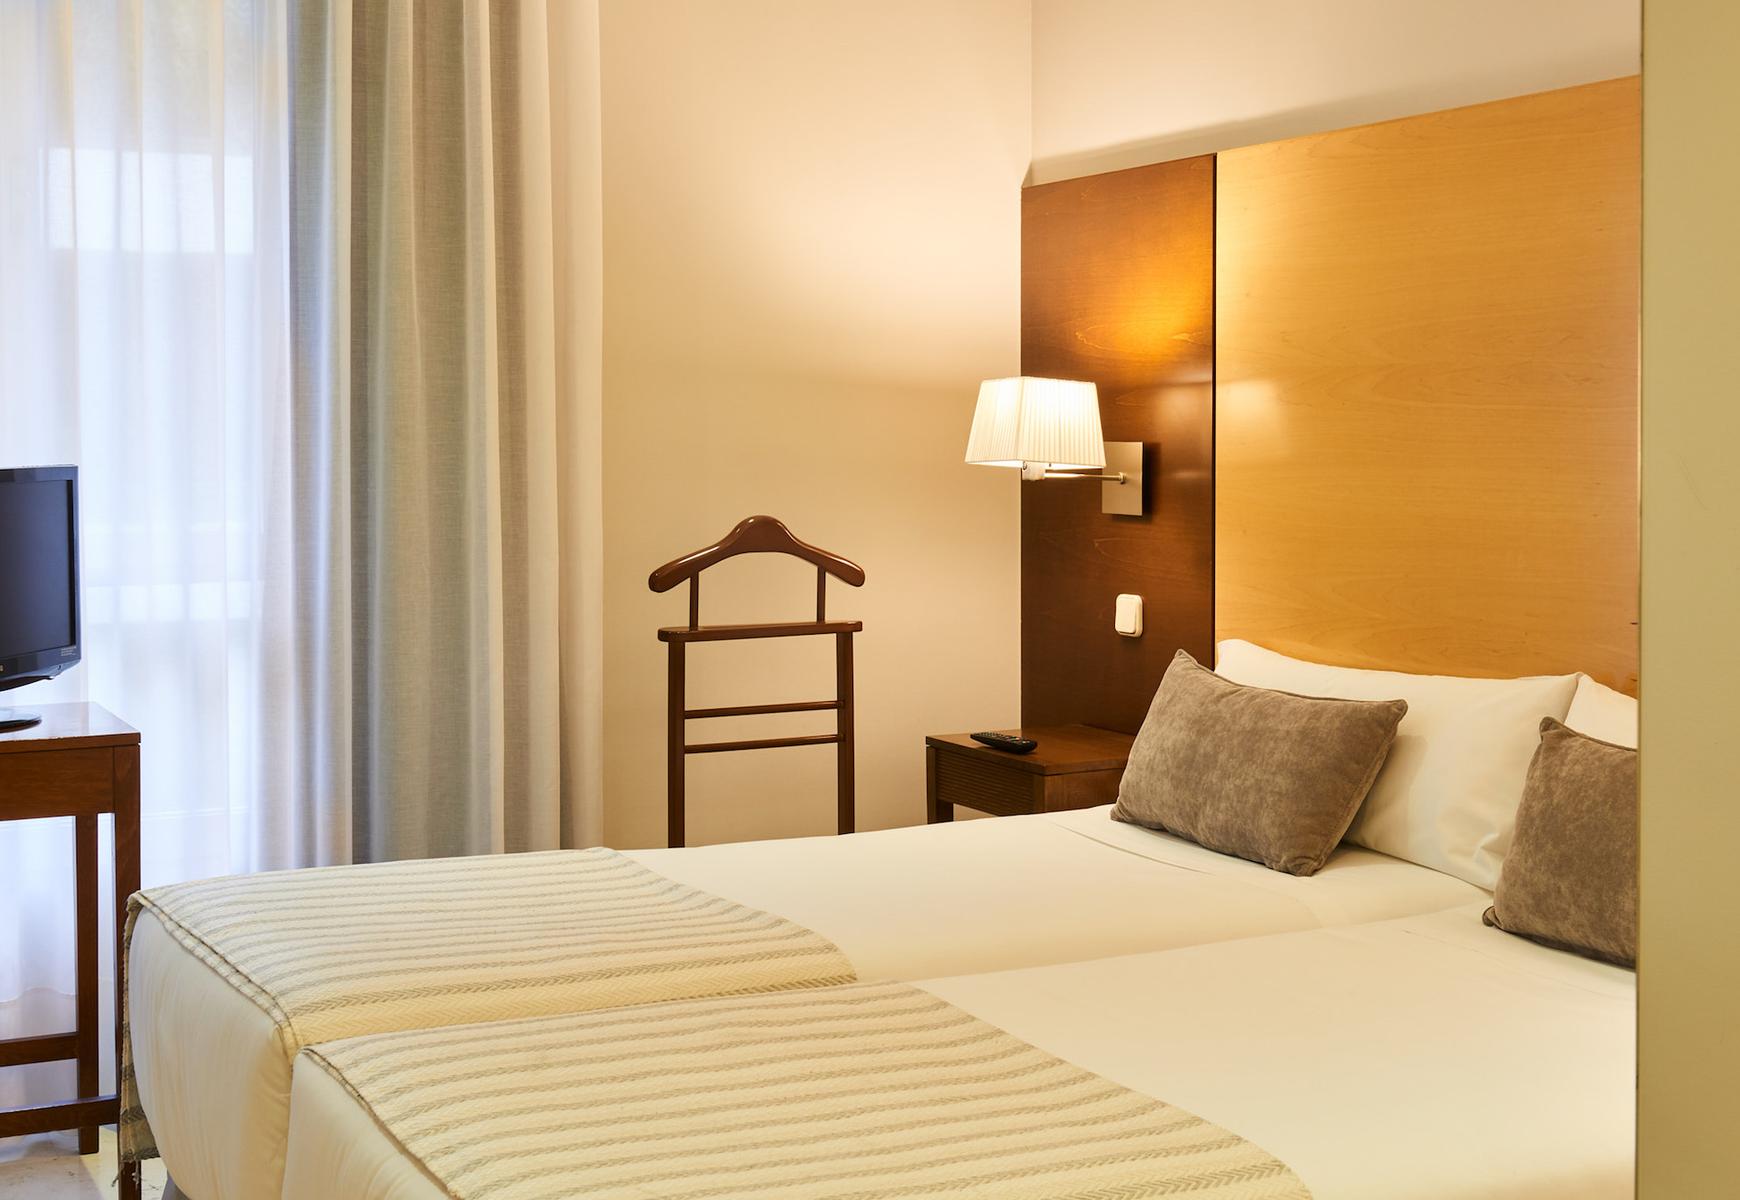 Hotel Suites Barrio de Salamanca | Madrid | Accommodation 03 - 2